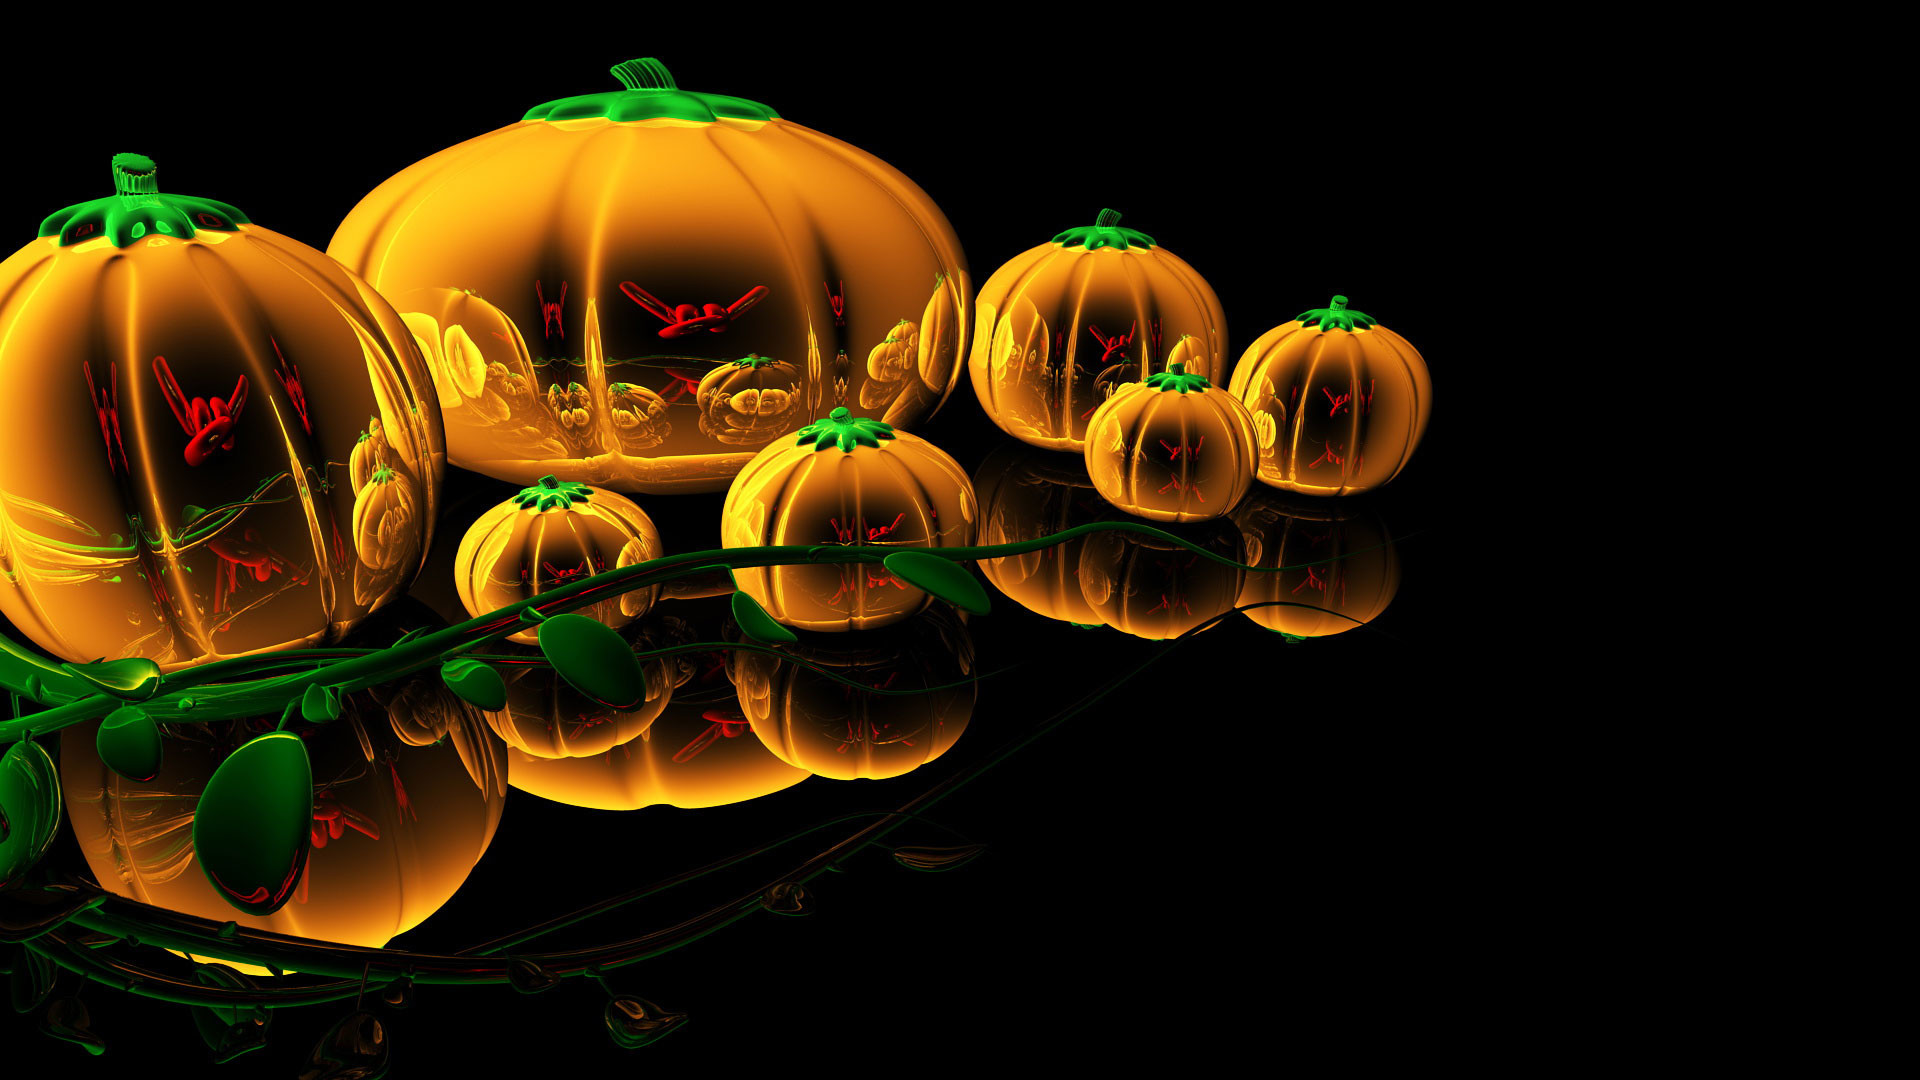 Free download 3D Halloween Wallpaper 59 images [1920x1080